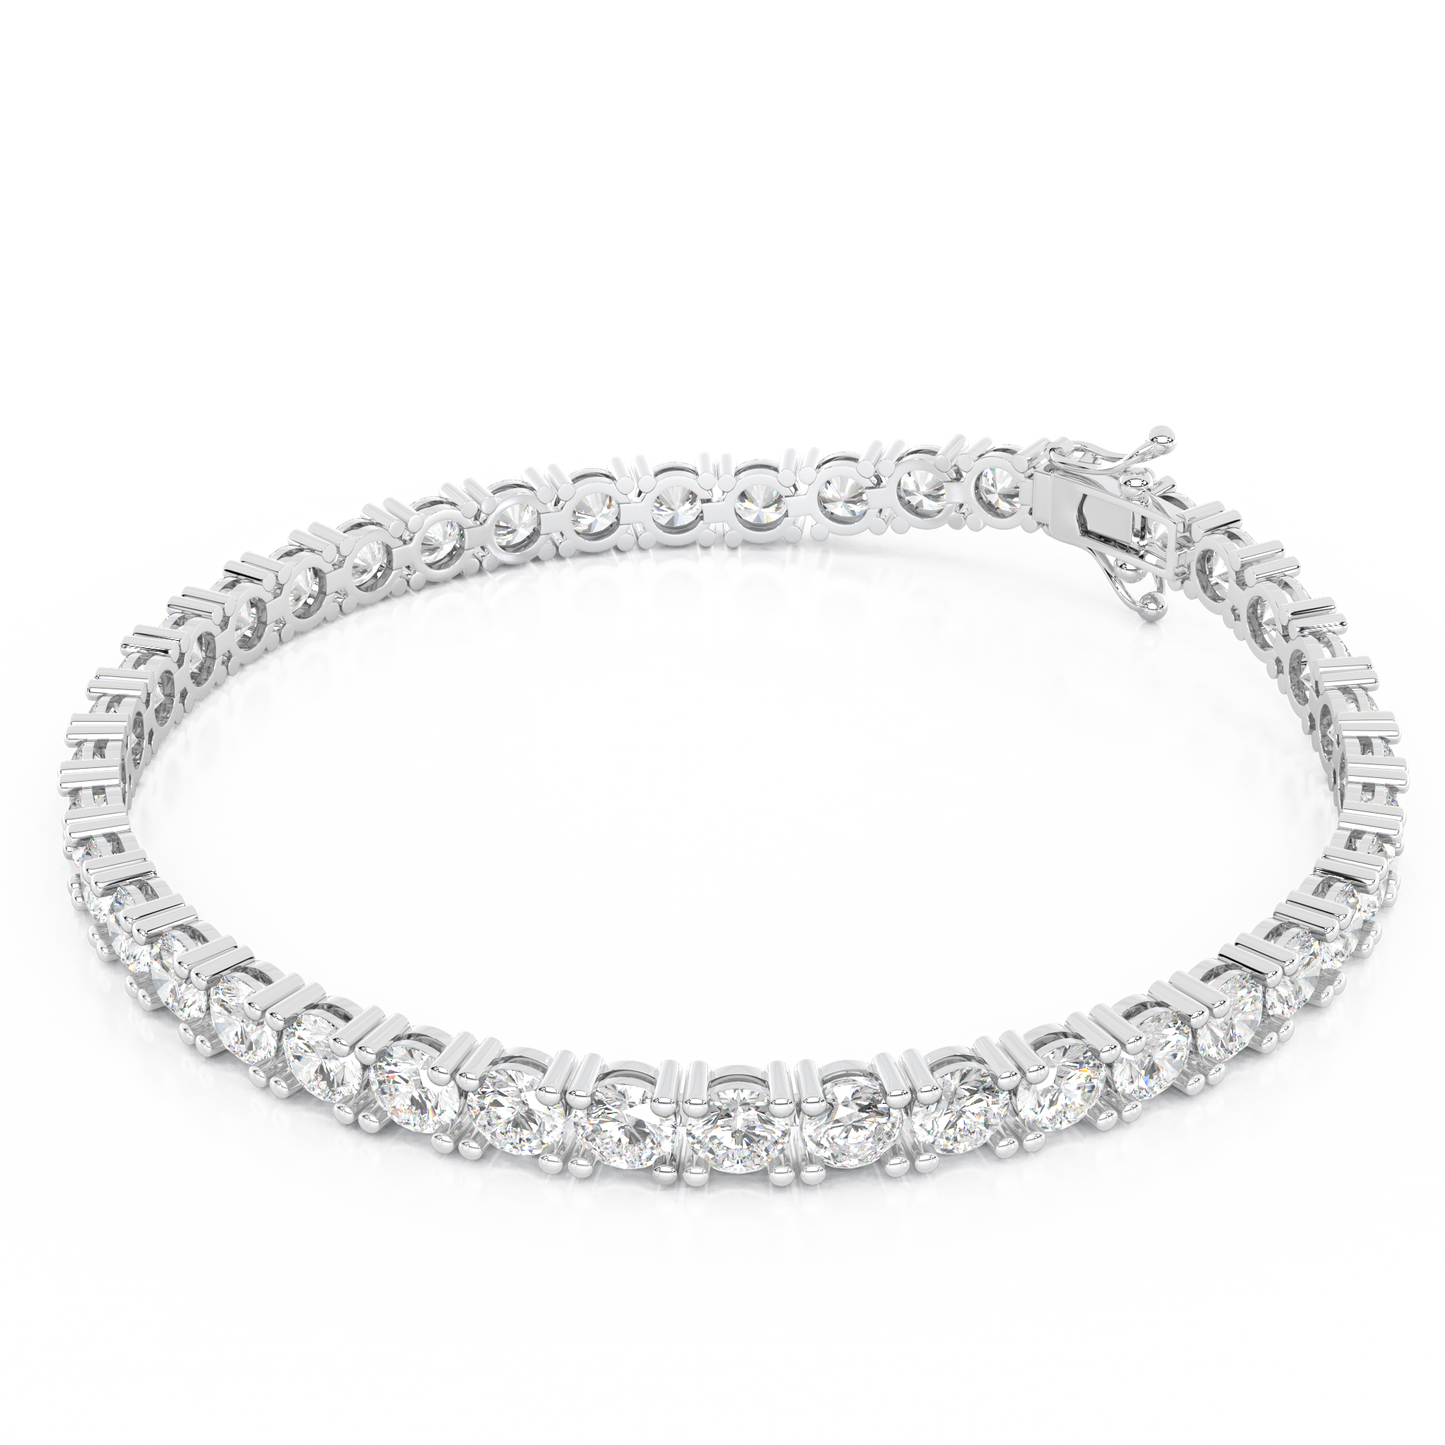 7.00cts+ 4-Prong Lab Grown Diamond Bracelet <Affordable>